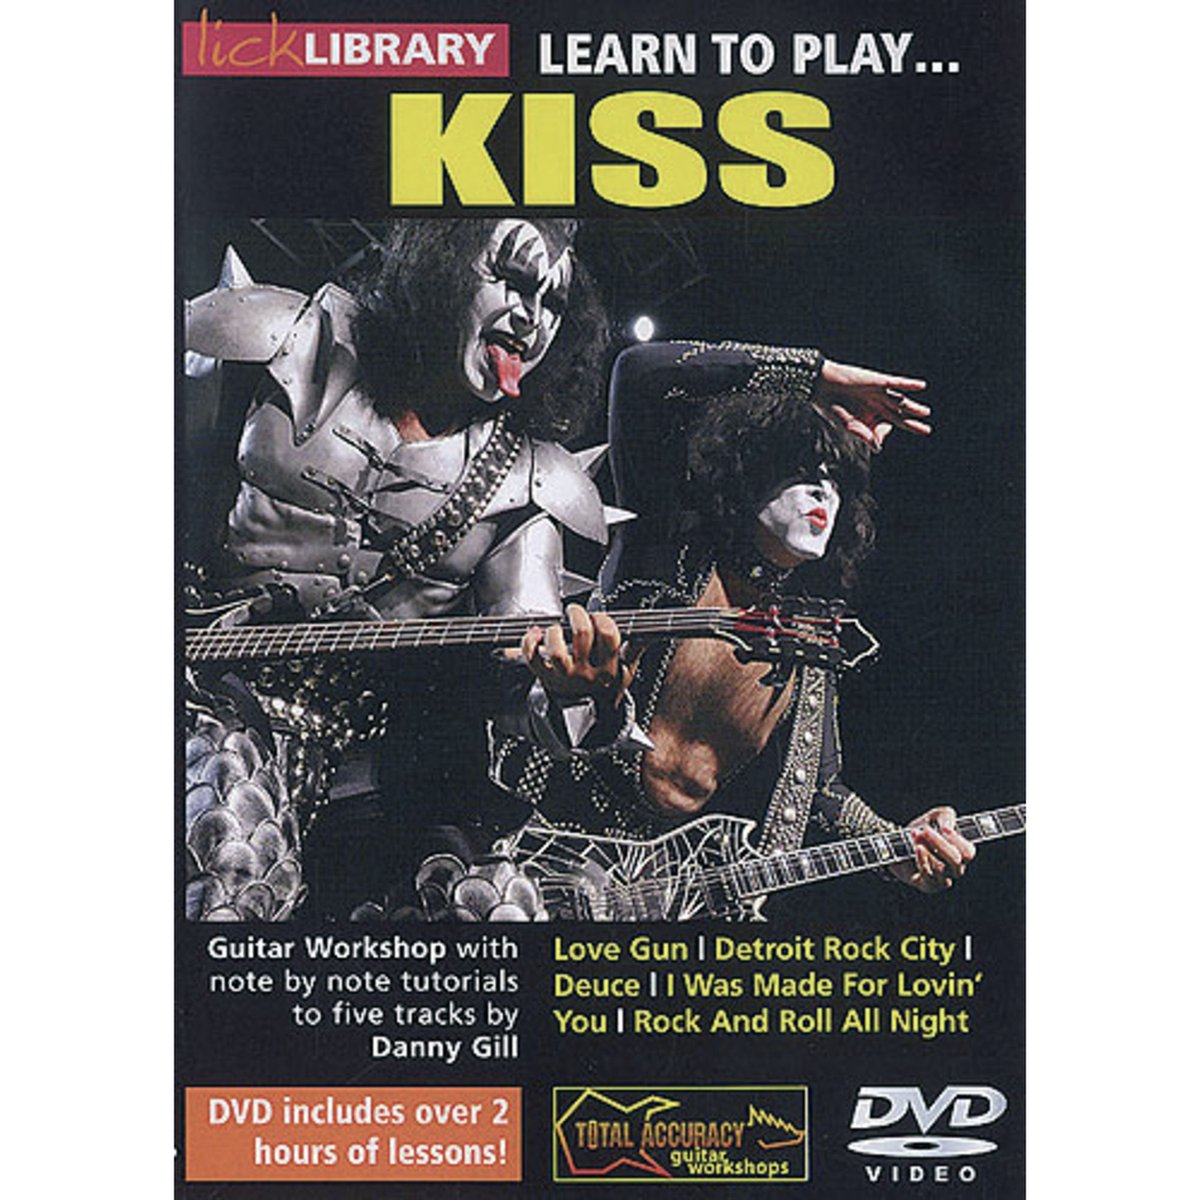 Roadrock International Lick Library - Kiss Learn to play (gitaar), DVD - DVD